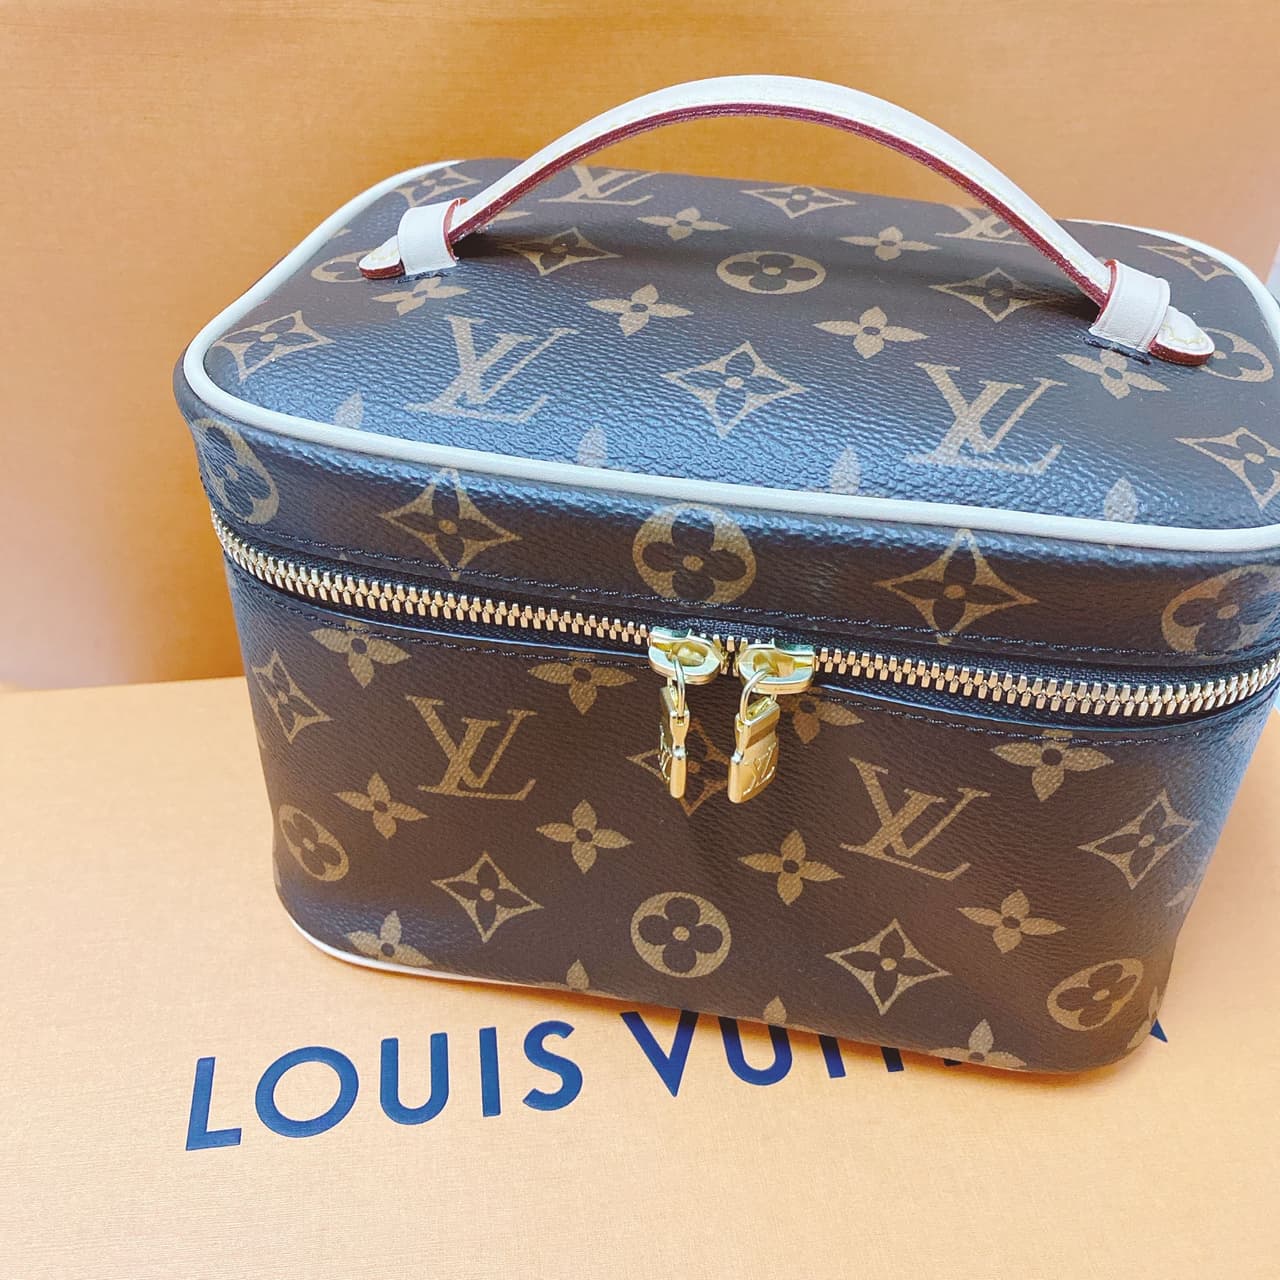 Review] Louis Vuitton Favorite MM in Damier Ebene : r/DHgate